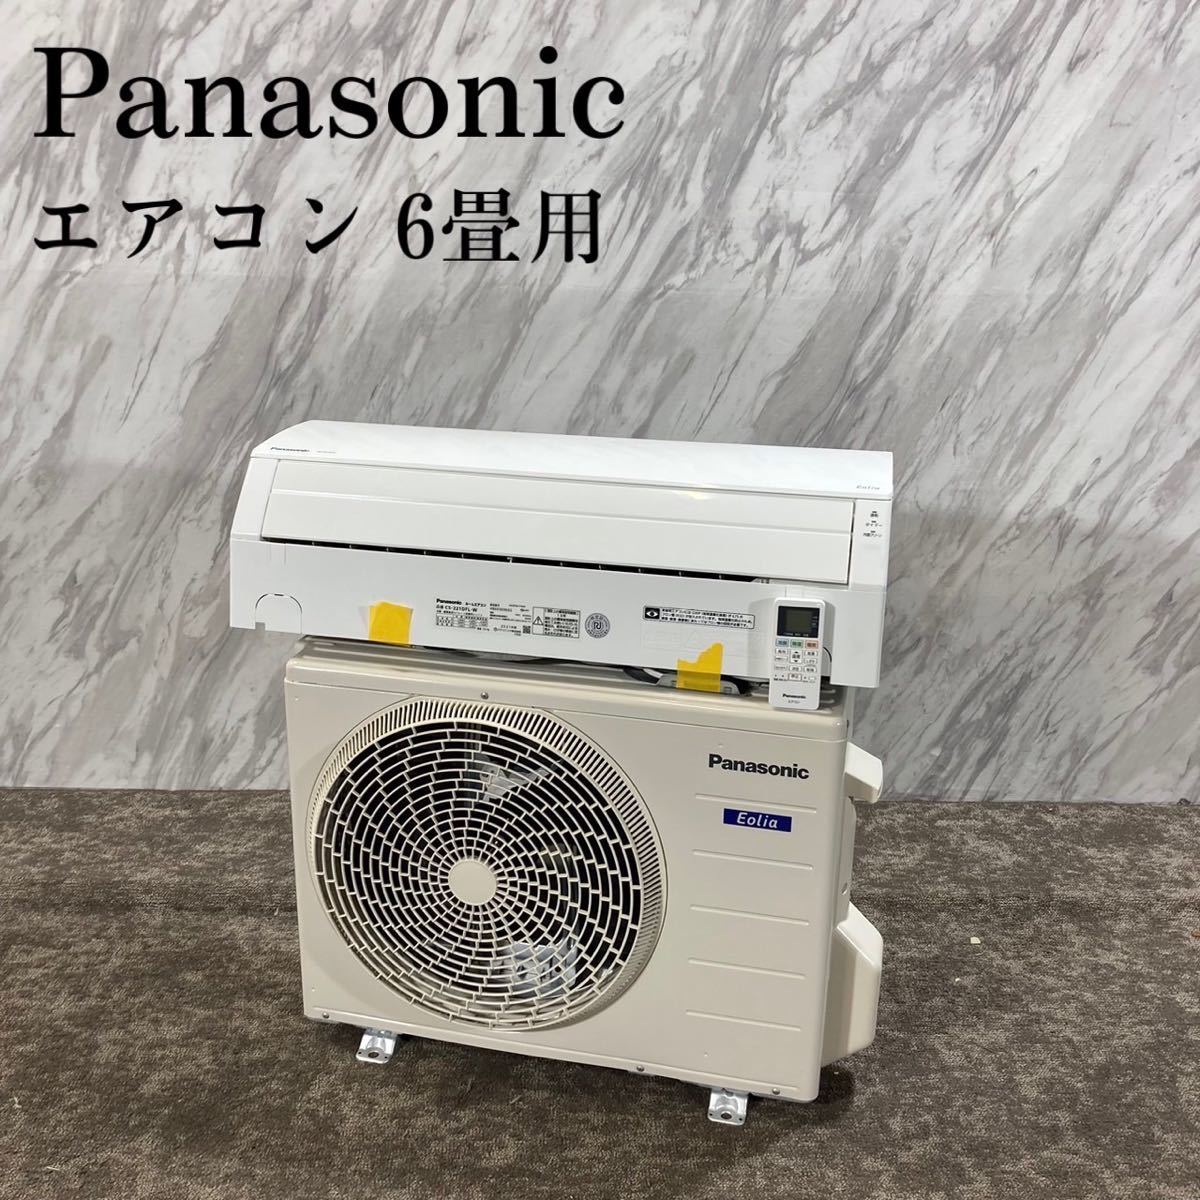 Panasonic エアコン CS-221DFL-W 6畳用 エオリア K384